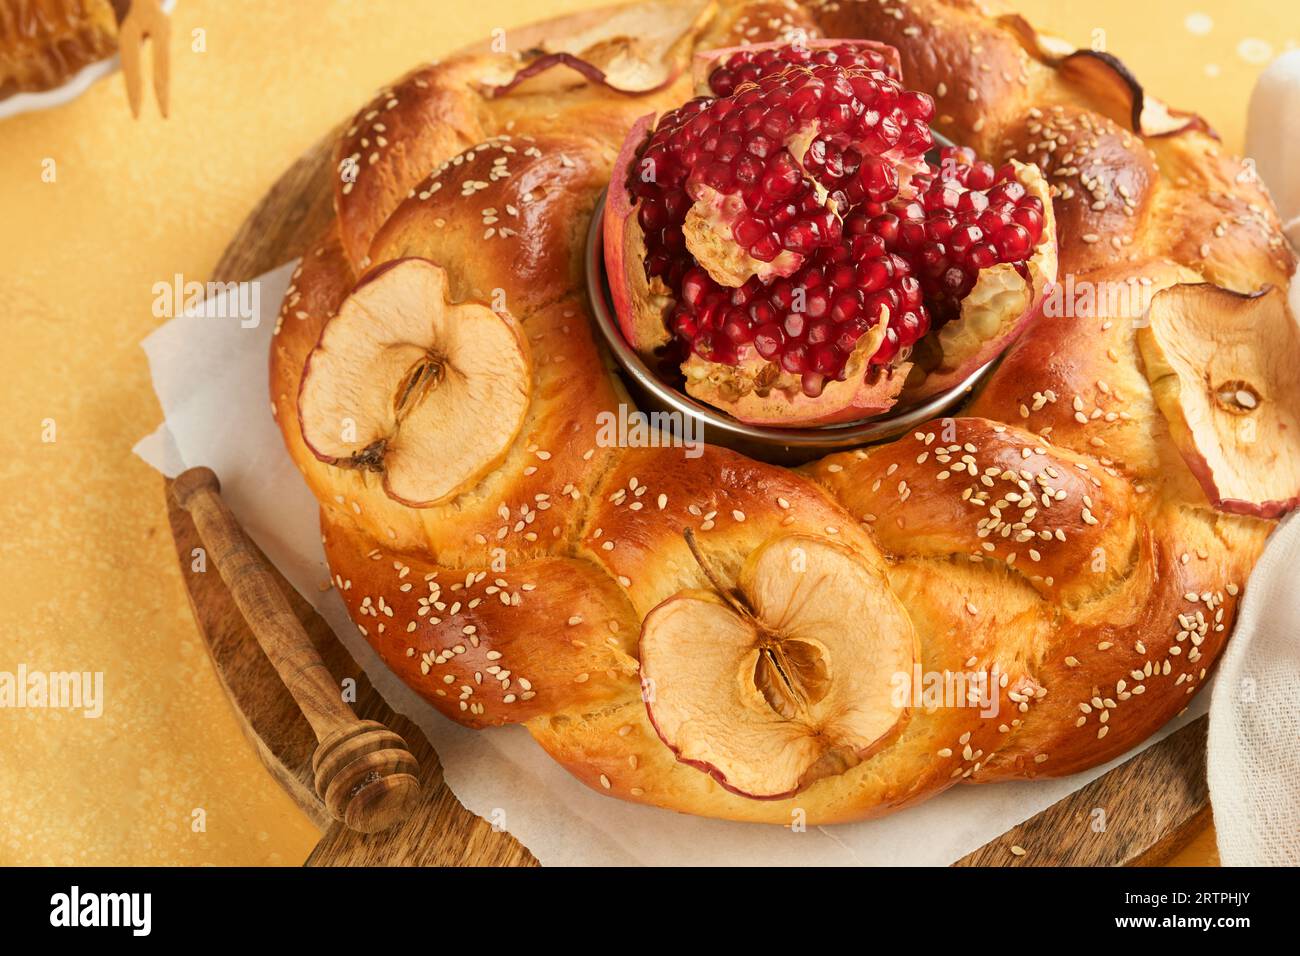 Jewish Holidays - Rosh Hashanah or Rosh Hashana. Pomegranate, apples, honey and round challah on rustic yellow table background. Jewish Autumn celebra Stock Photo